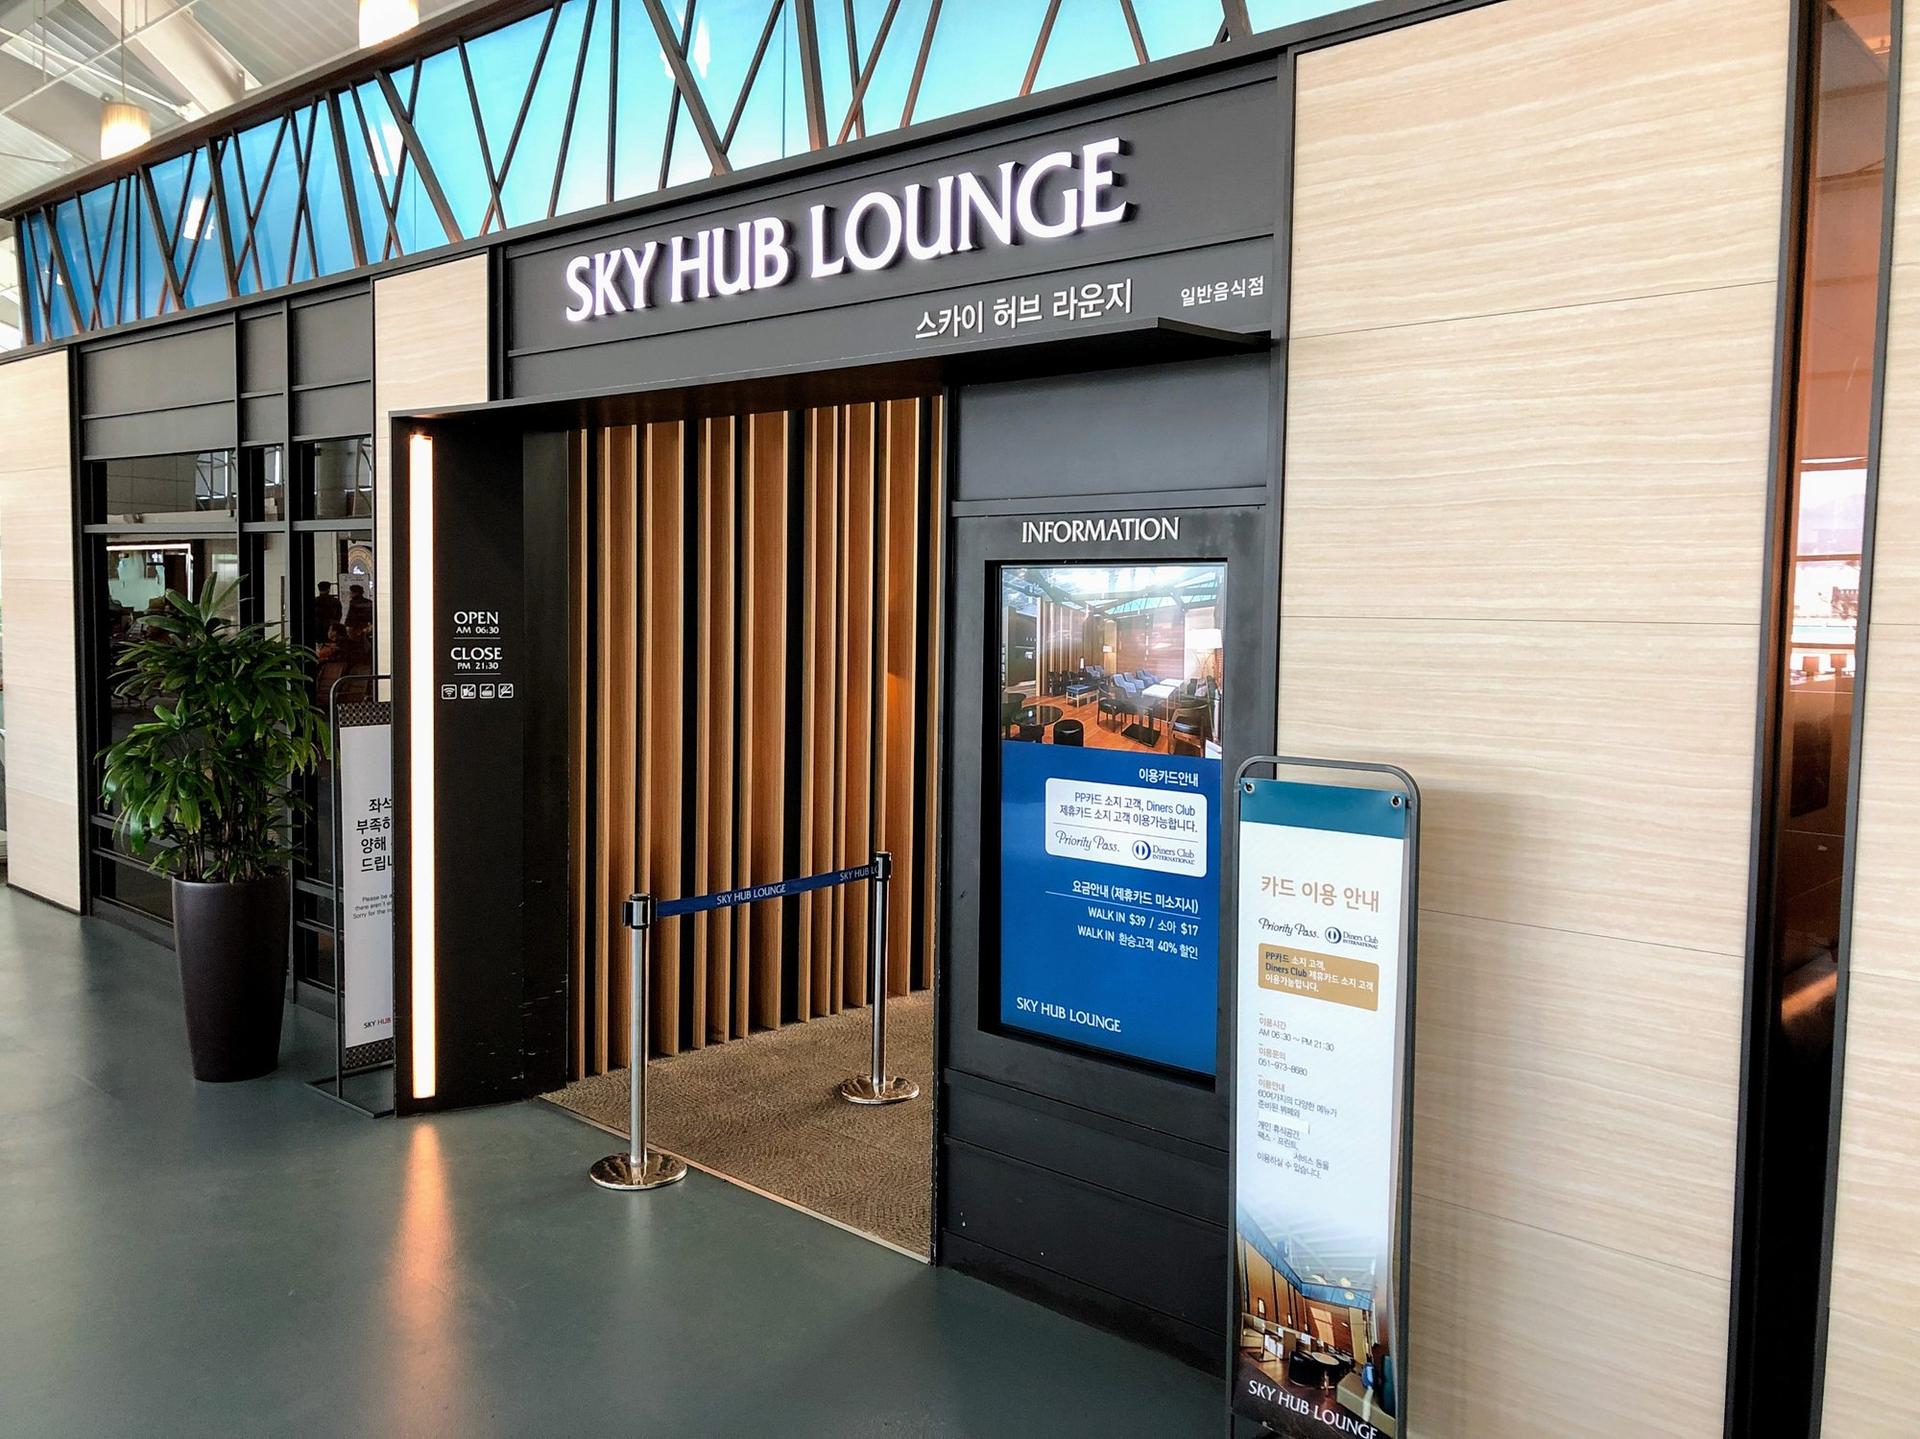 Sky Hub Lounge image 16 of 21